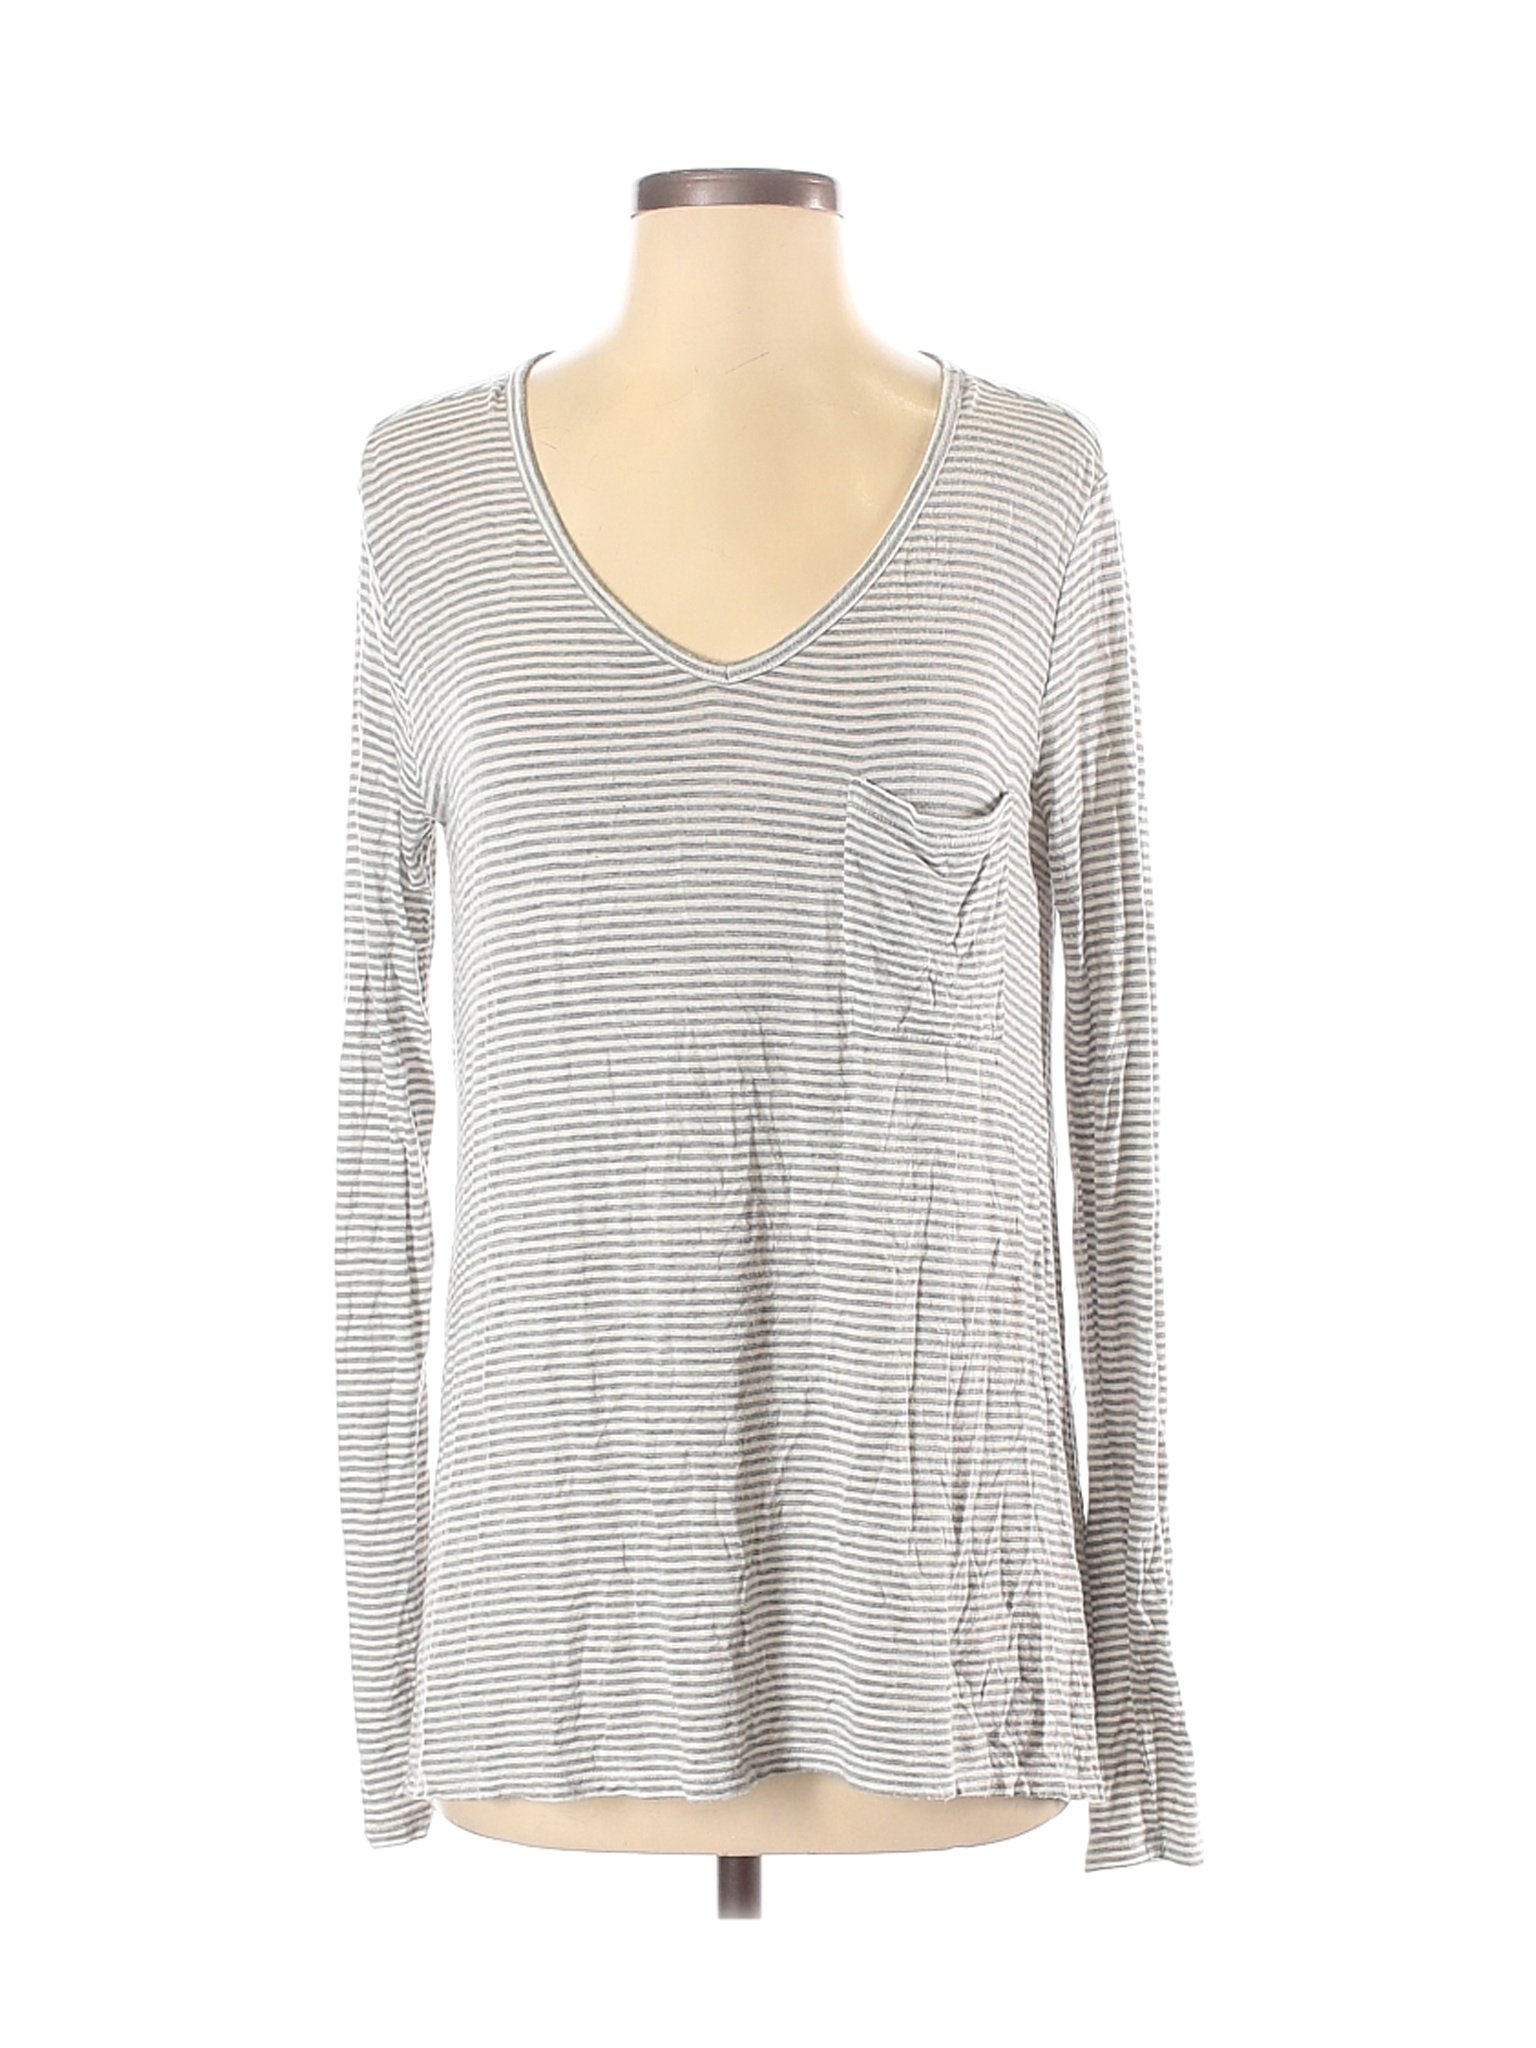 Abercrombie & Fitch Women Gray Long Sleeve T-Shirt XS | eBay